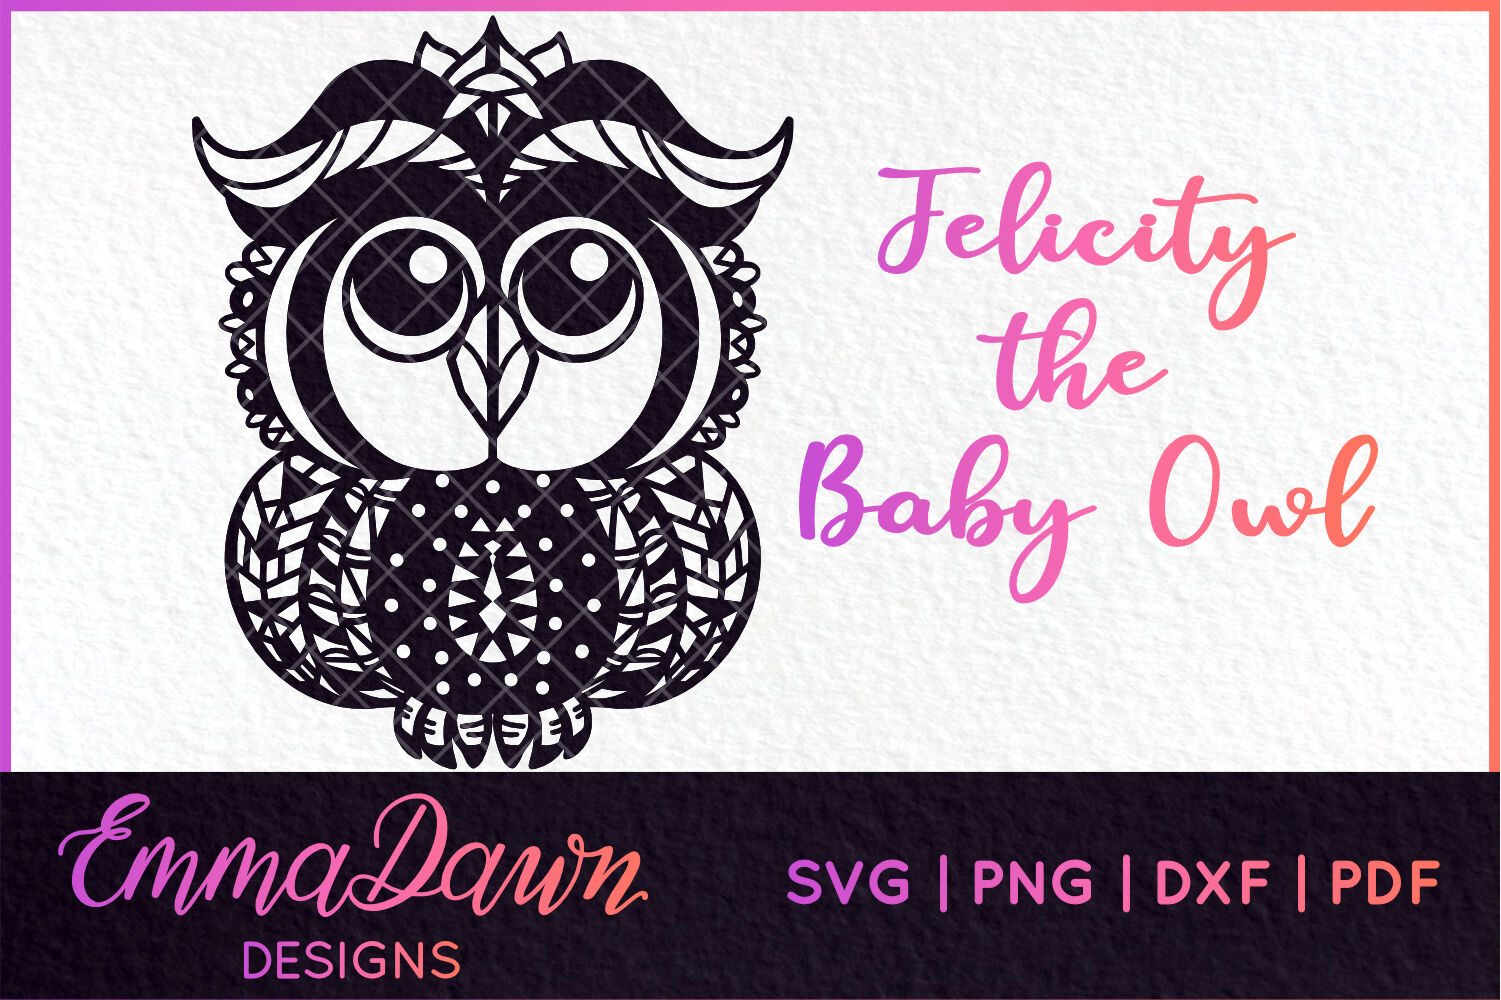 Download Felicity The Baby Owl Mandala Zentangle Design Svg By Emma Dawn Designs Thehungryjpeg Com